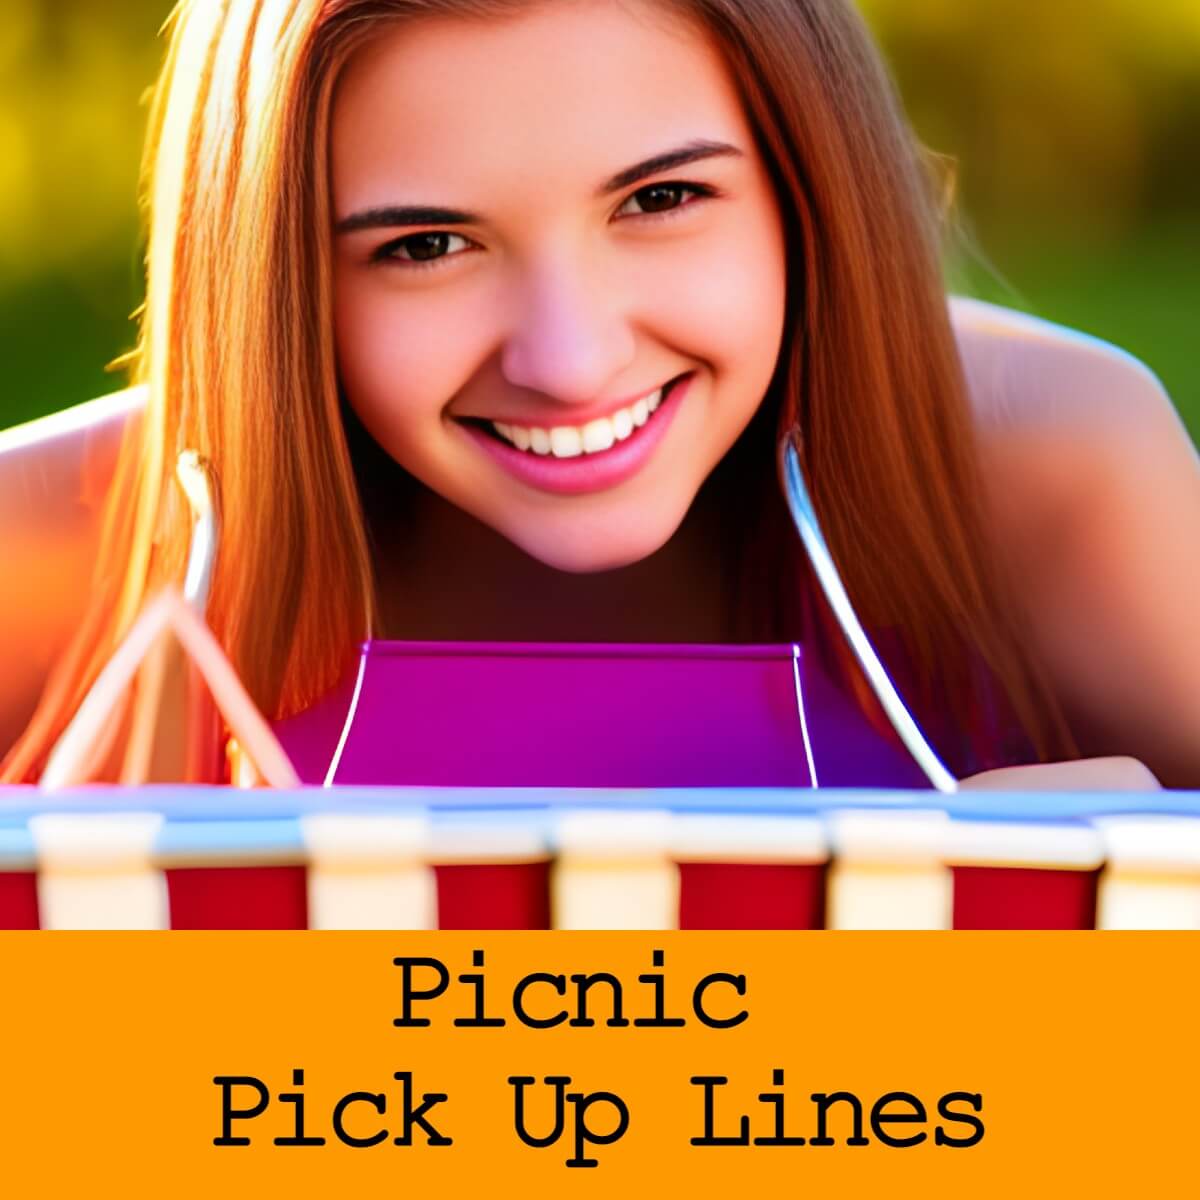 Pick Up Lines About Picnics